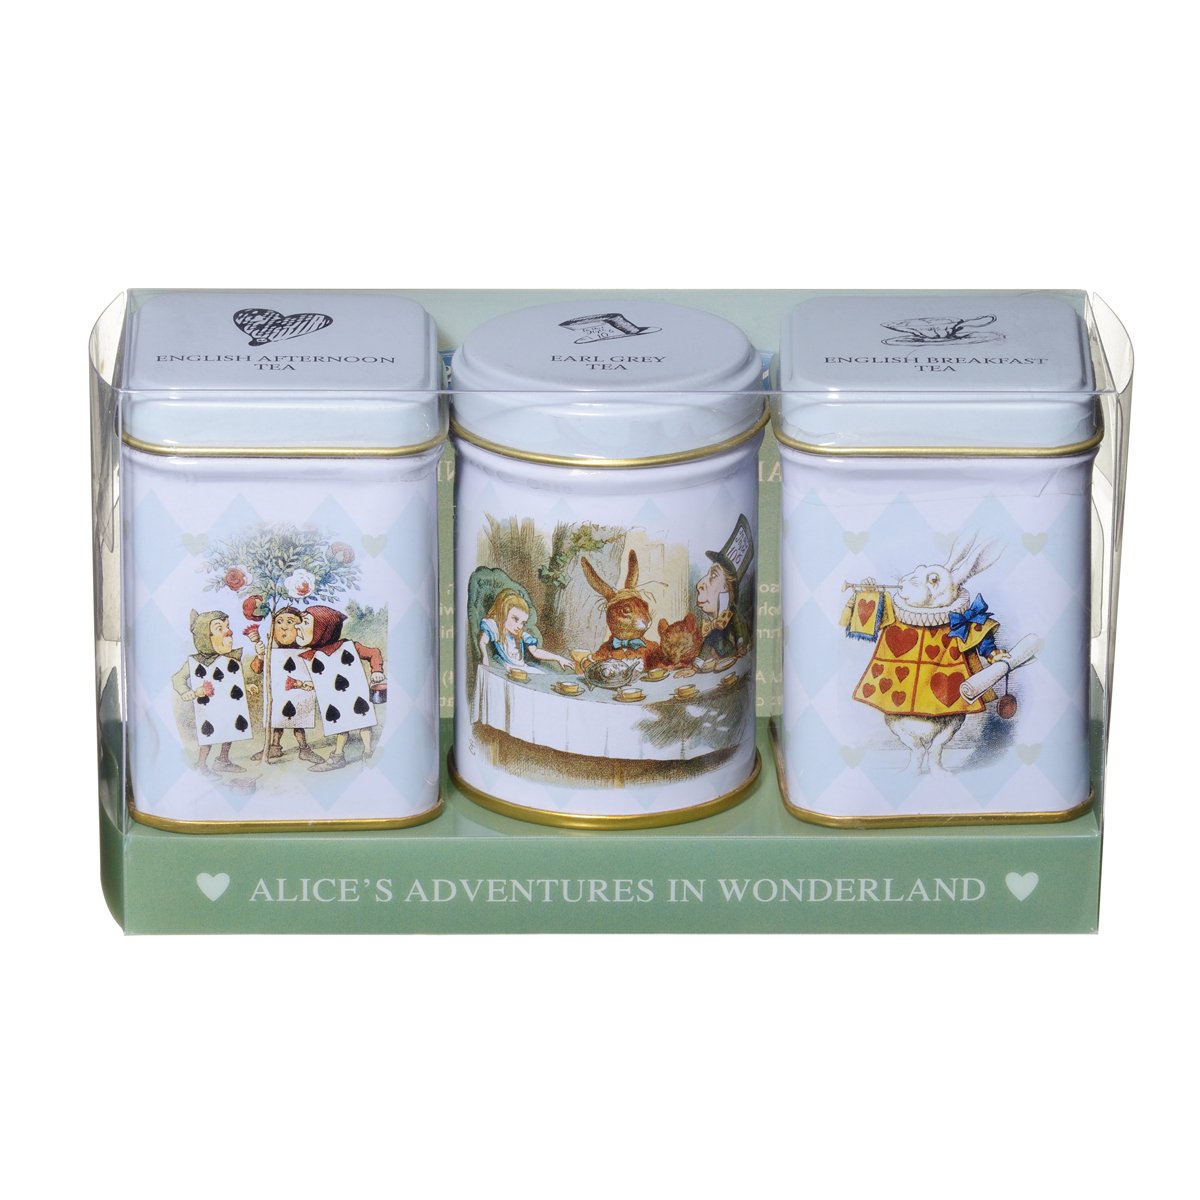 New English Teas 'Alice's Adventures in Wonderland' English Tea Tin Collectors Gift